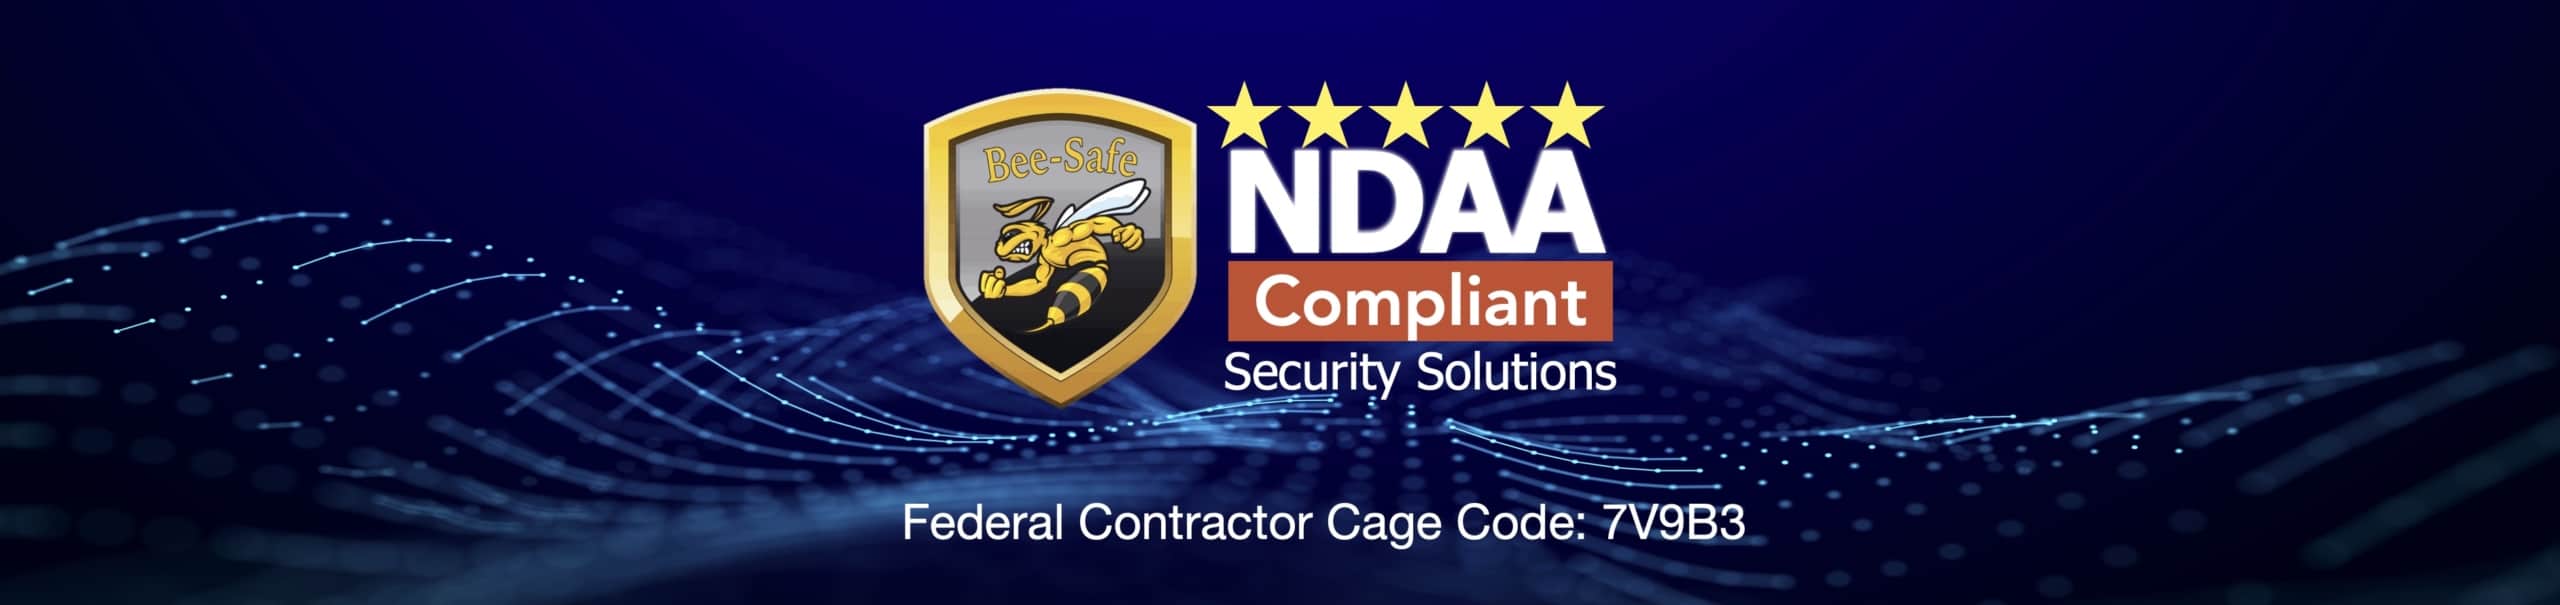 NDAA Compliant Security Cameras